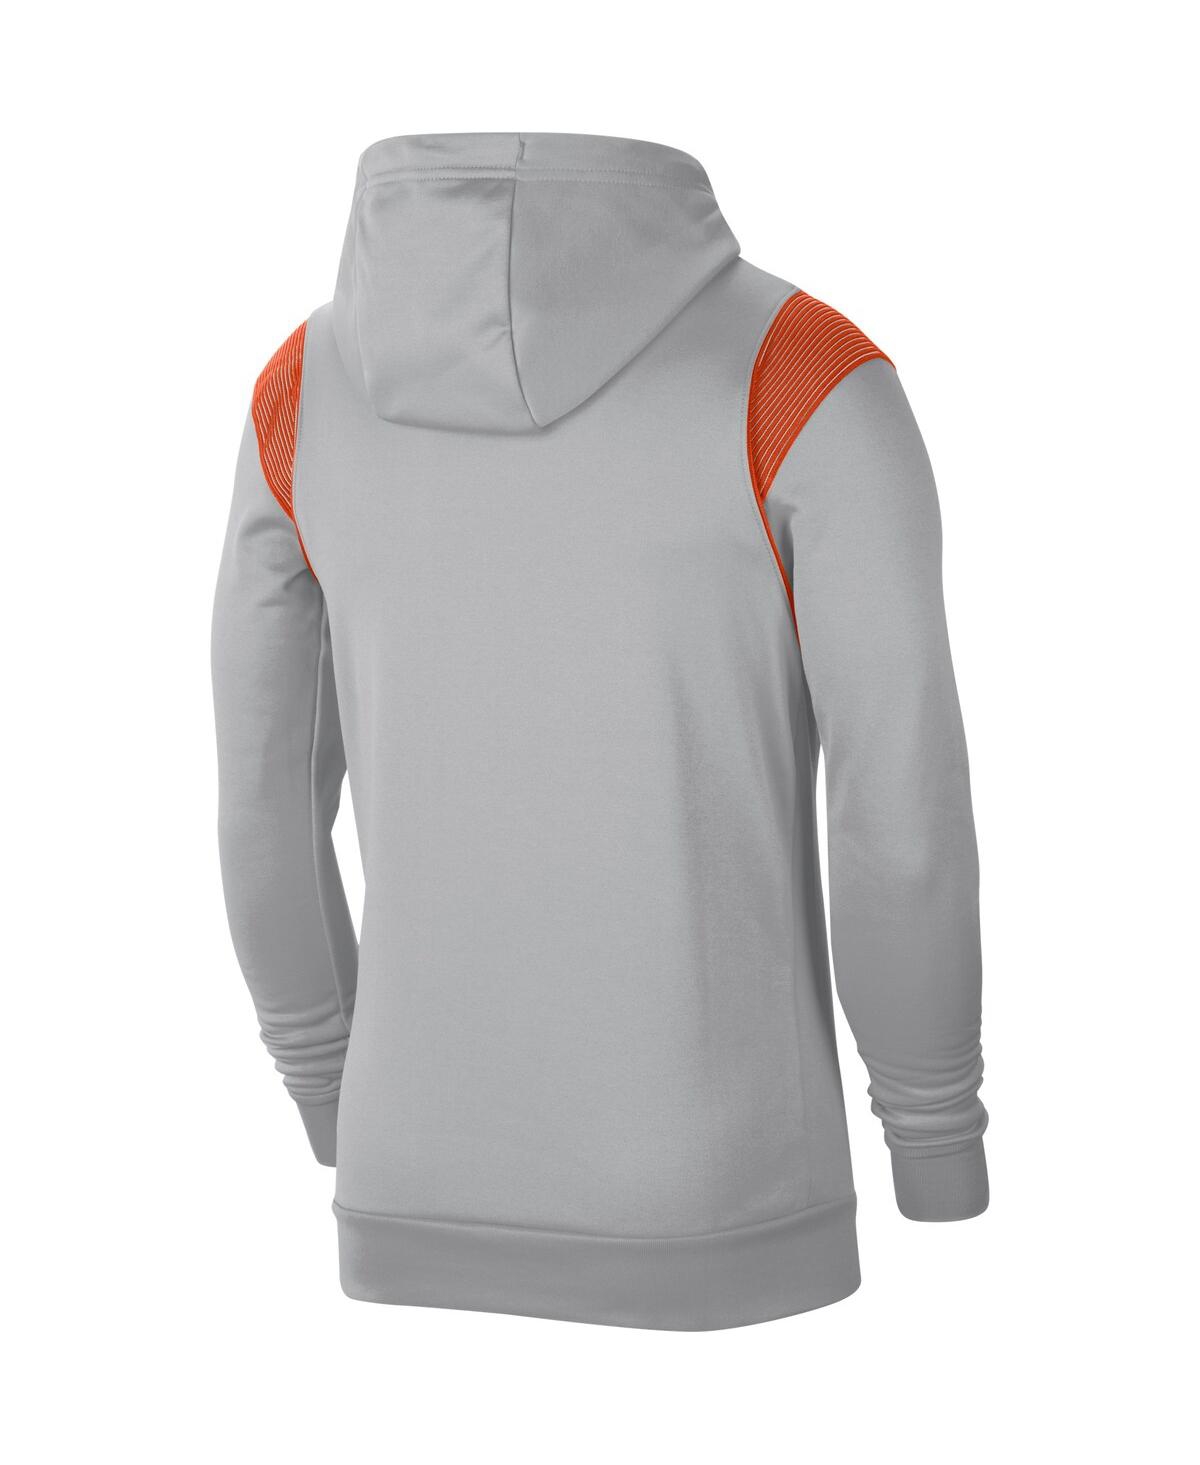 Shop Nike Men's Gray Clemson Tigers 2021 Team Sideline Performance Pullover Hoodie